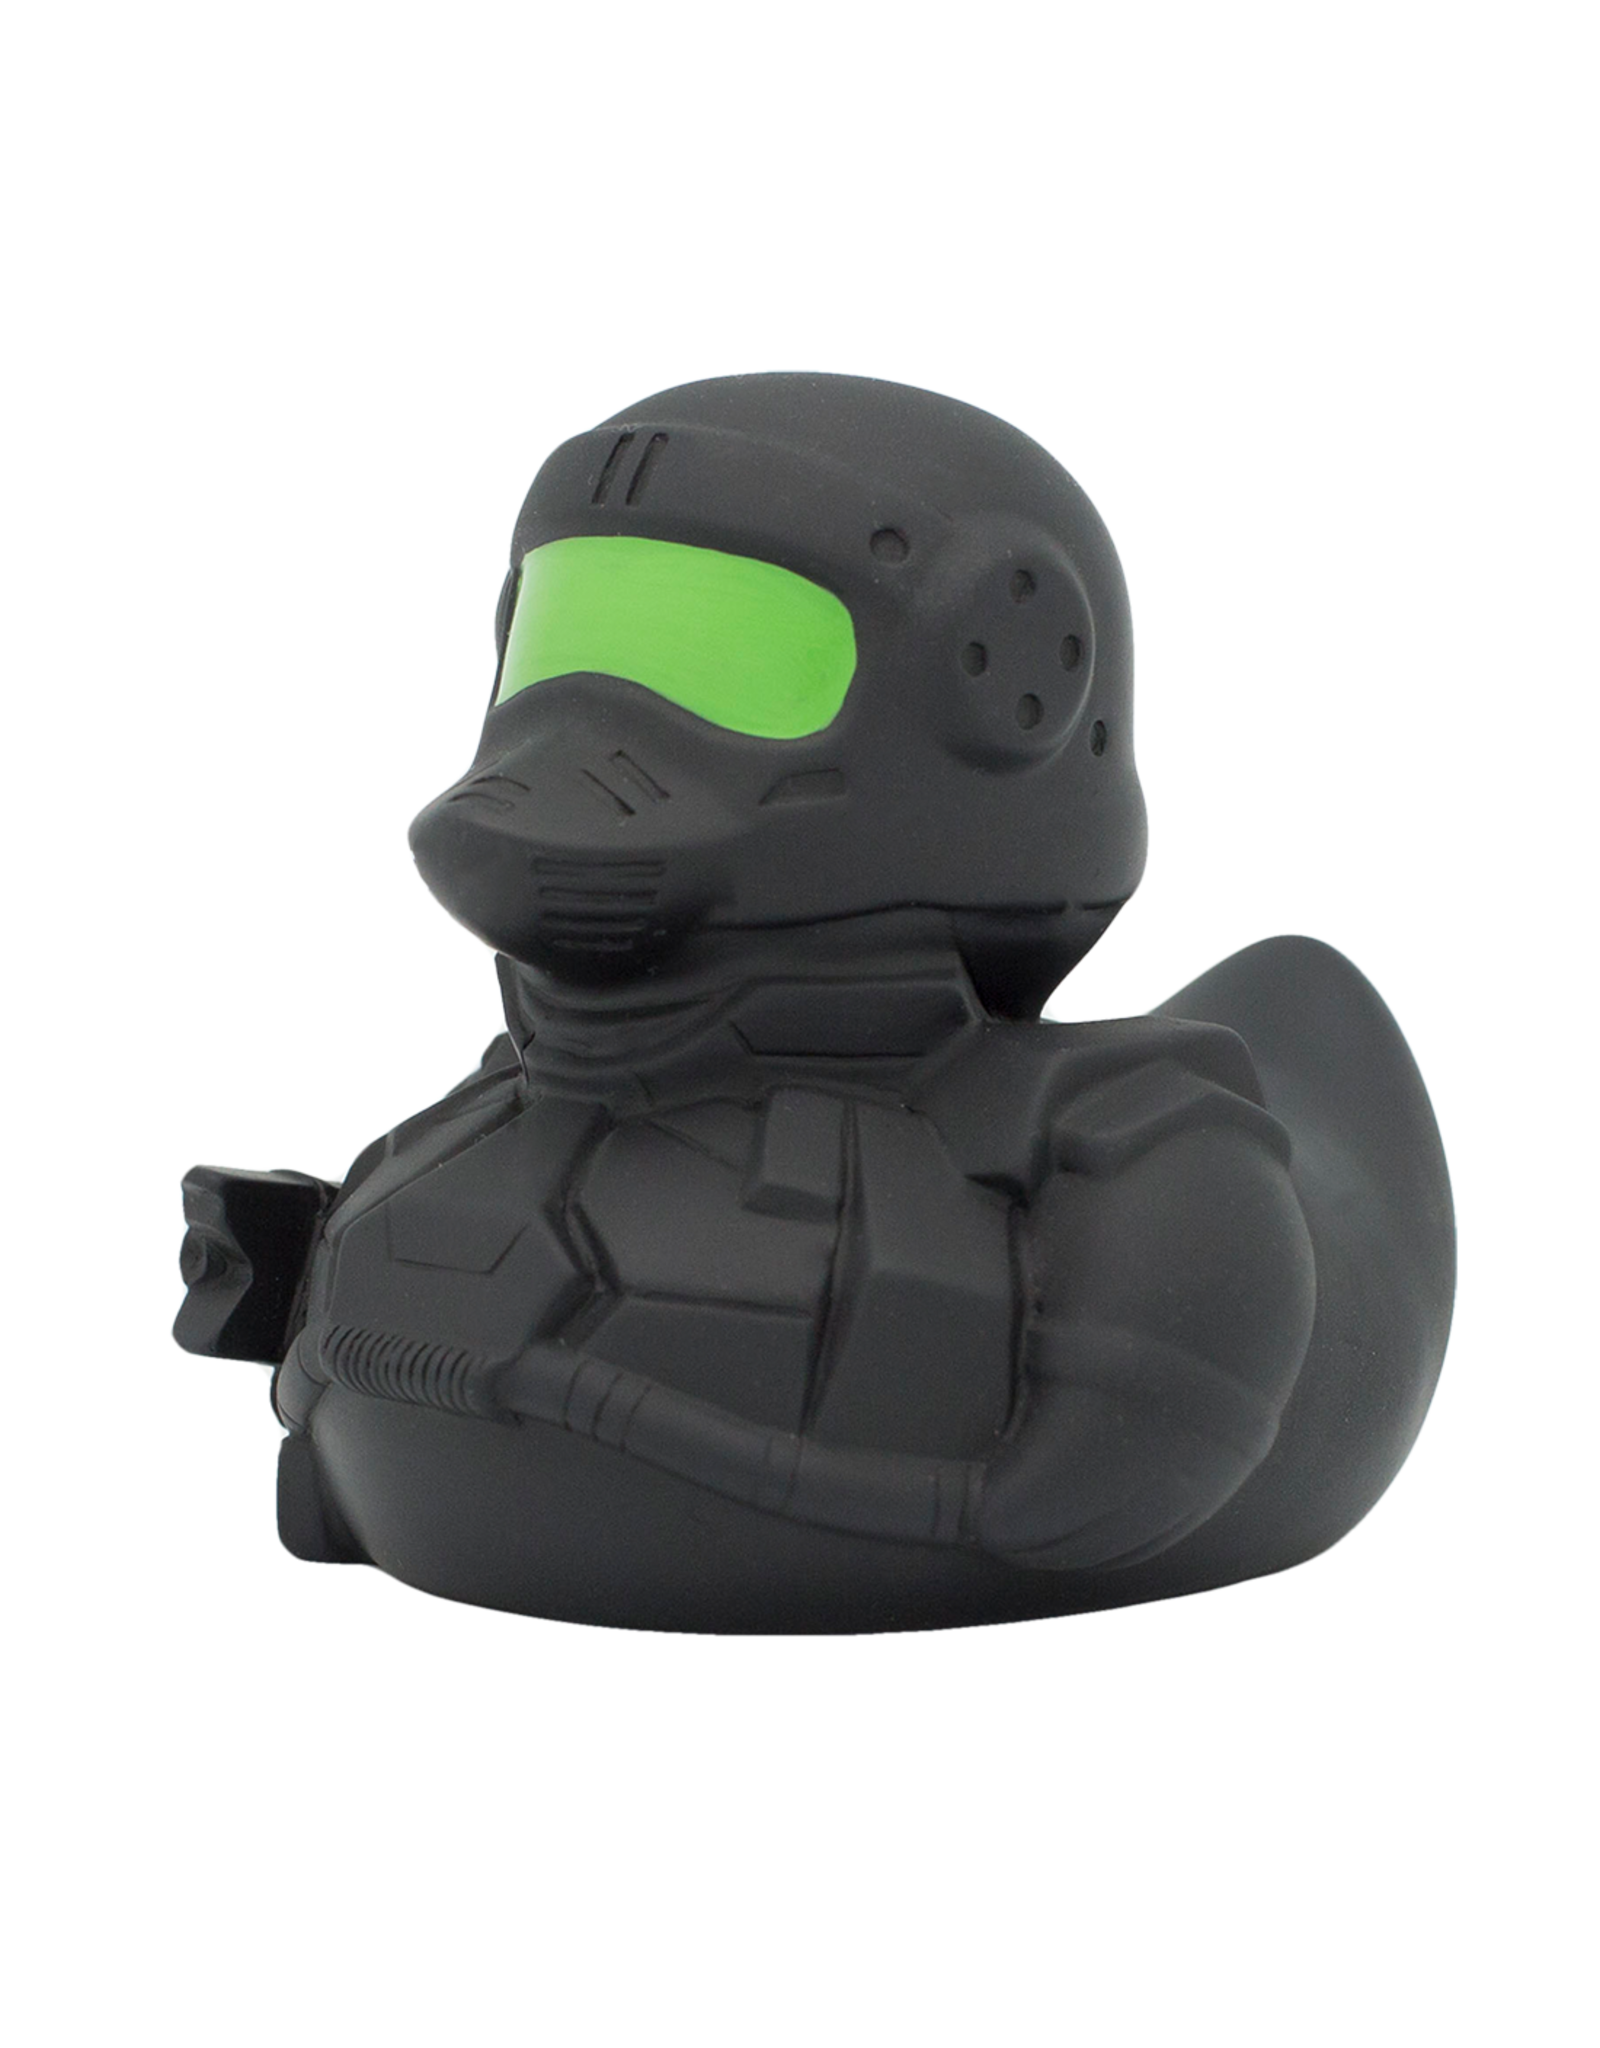 Lilalu Cyber Soldier Rubber Duck